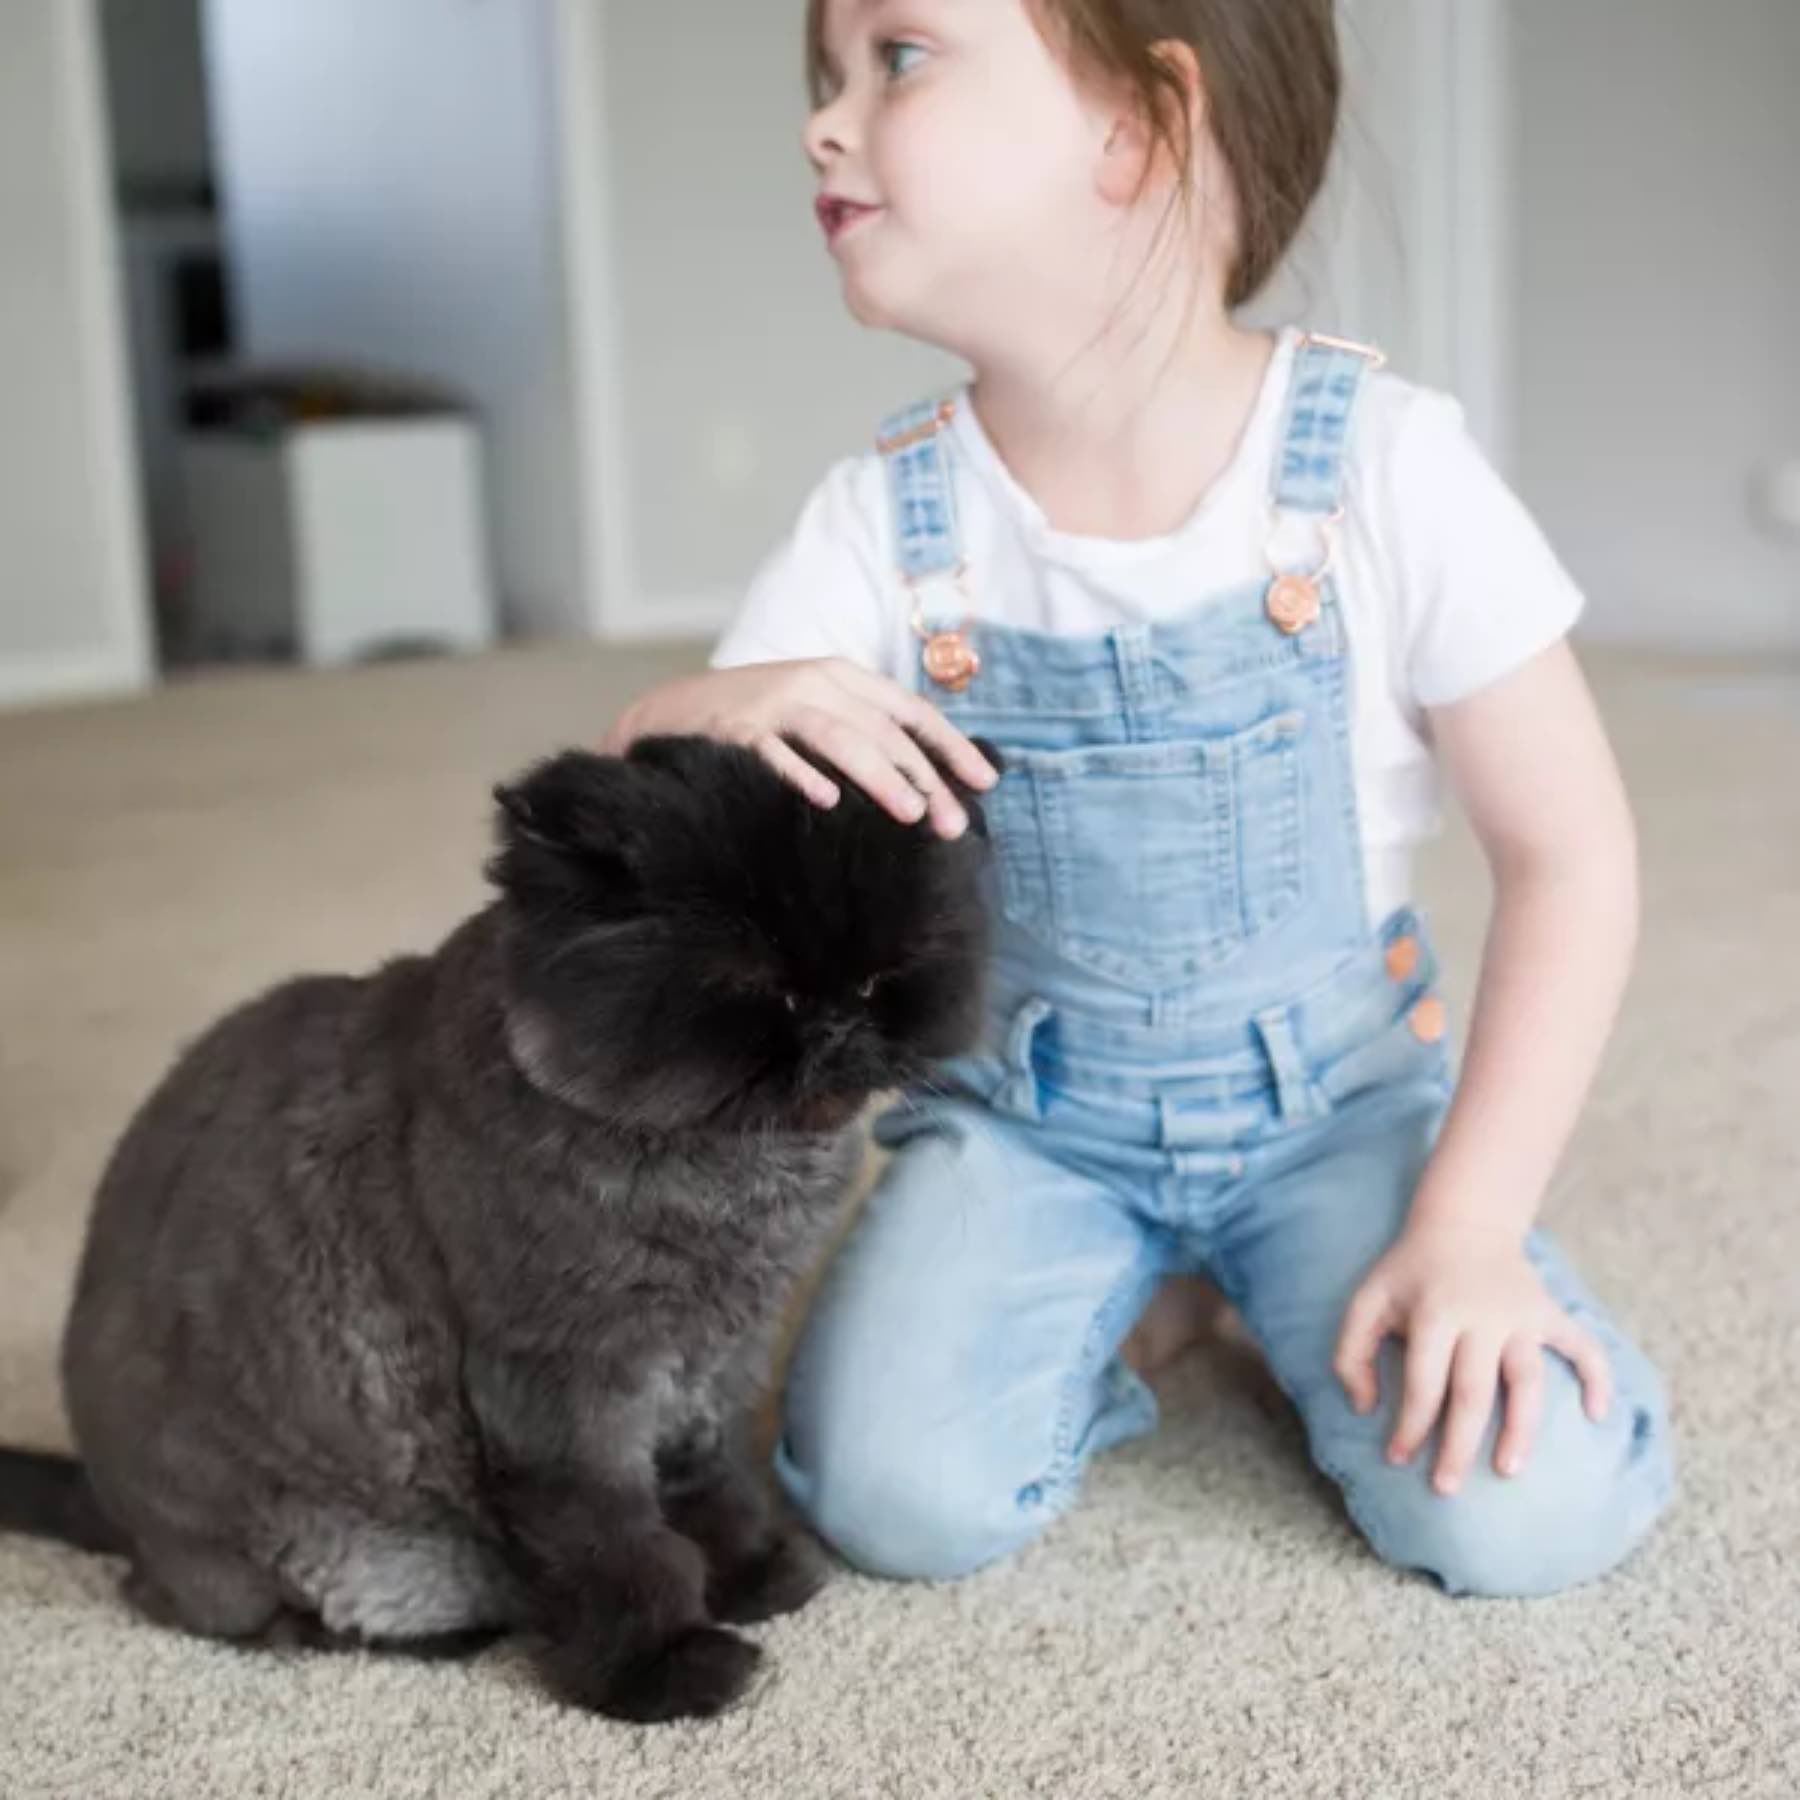 Little girl enjoying the companionship of a gray cat on Zerorez cleaned carpet.